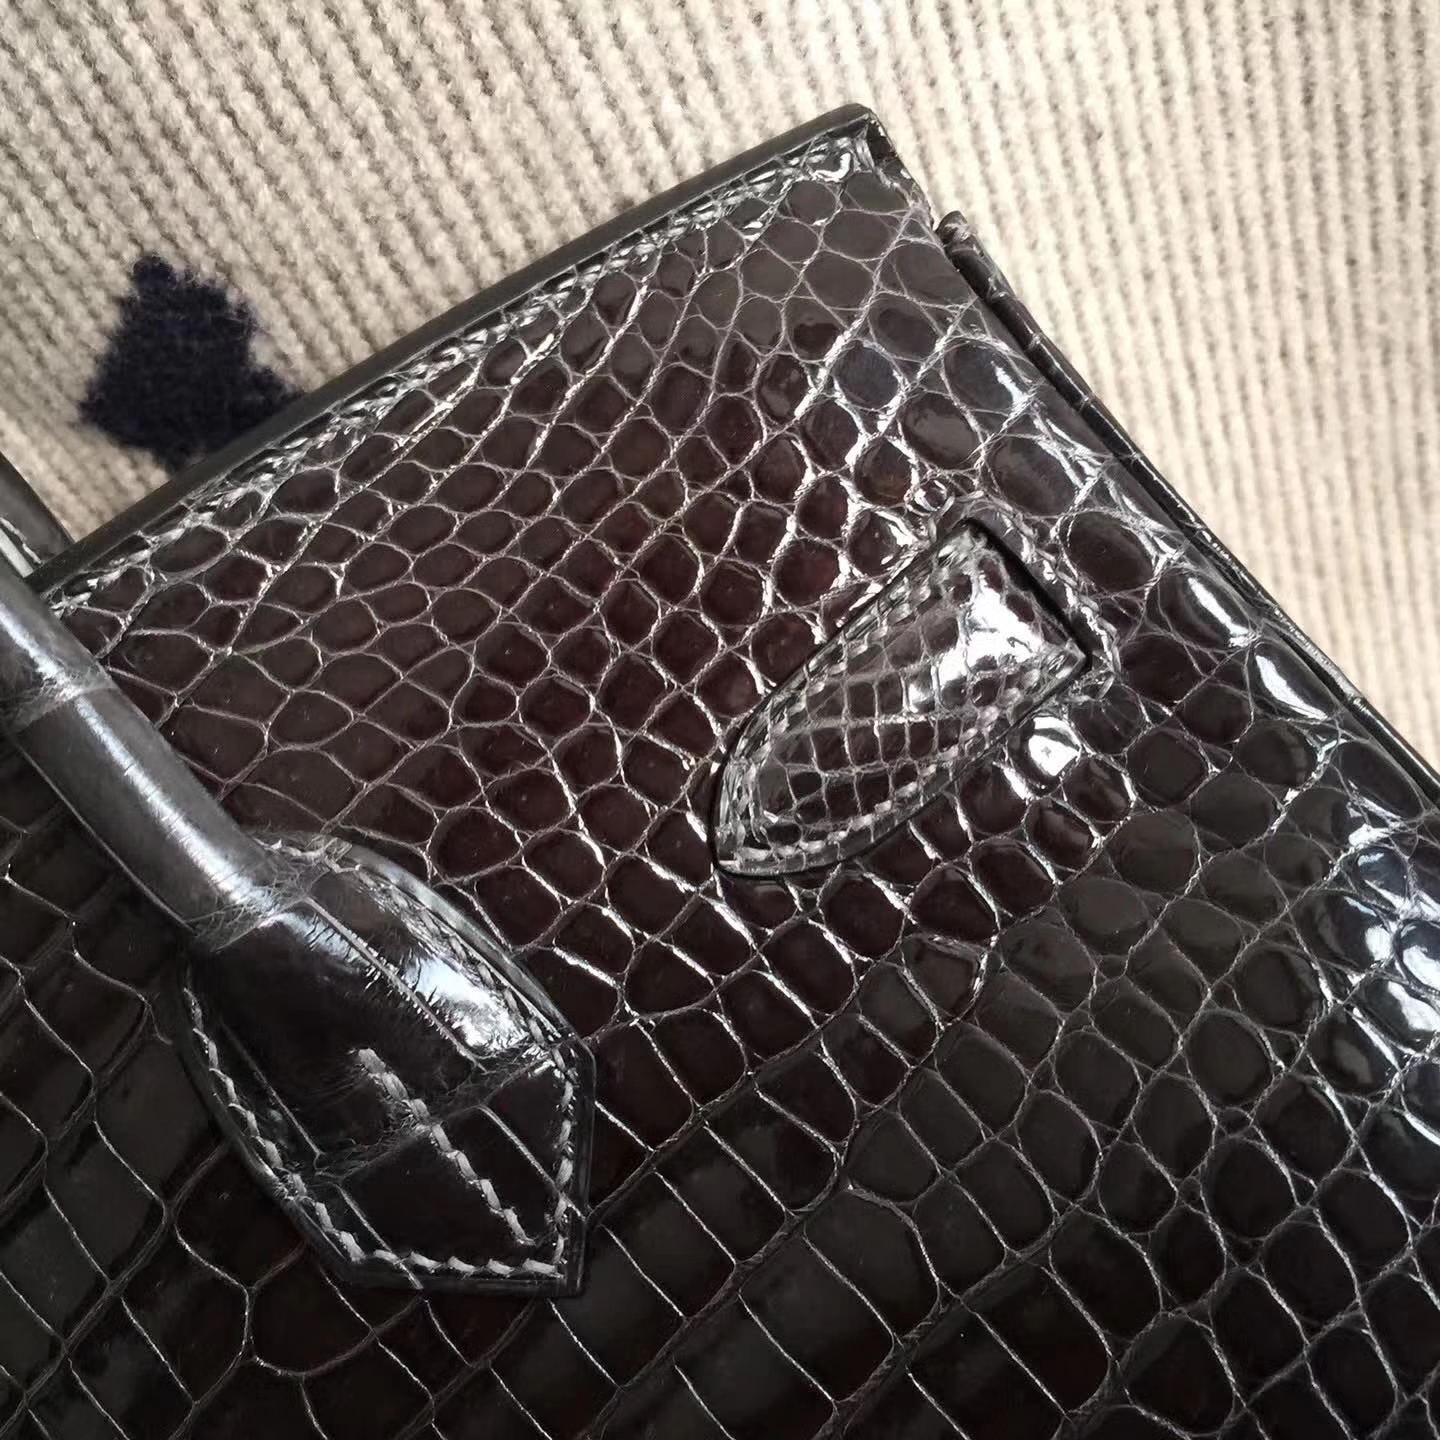 Sale Hermes Crocodile Shiny Leather Birkin30cm Bag in CK88 Graphite Grey